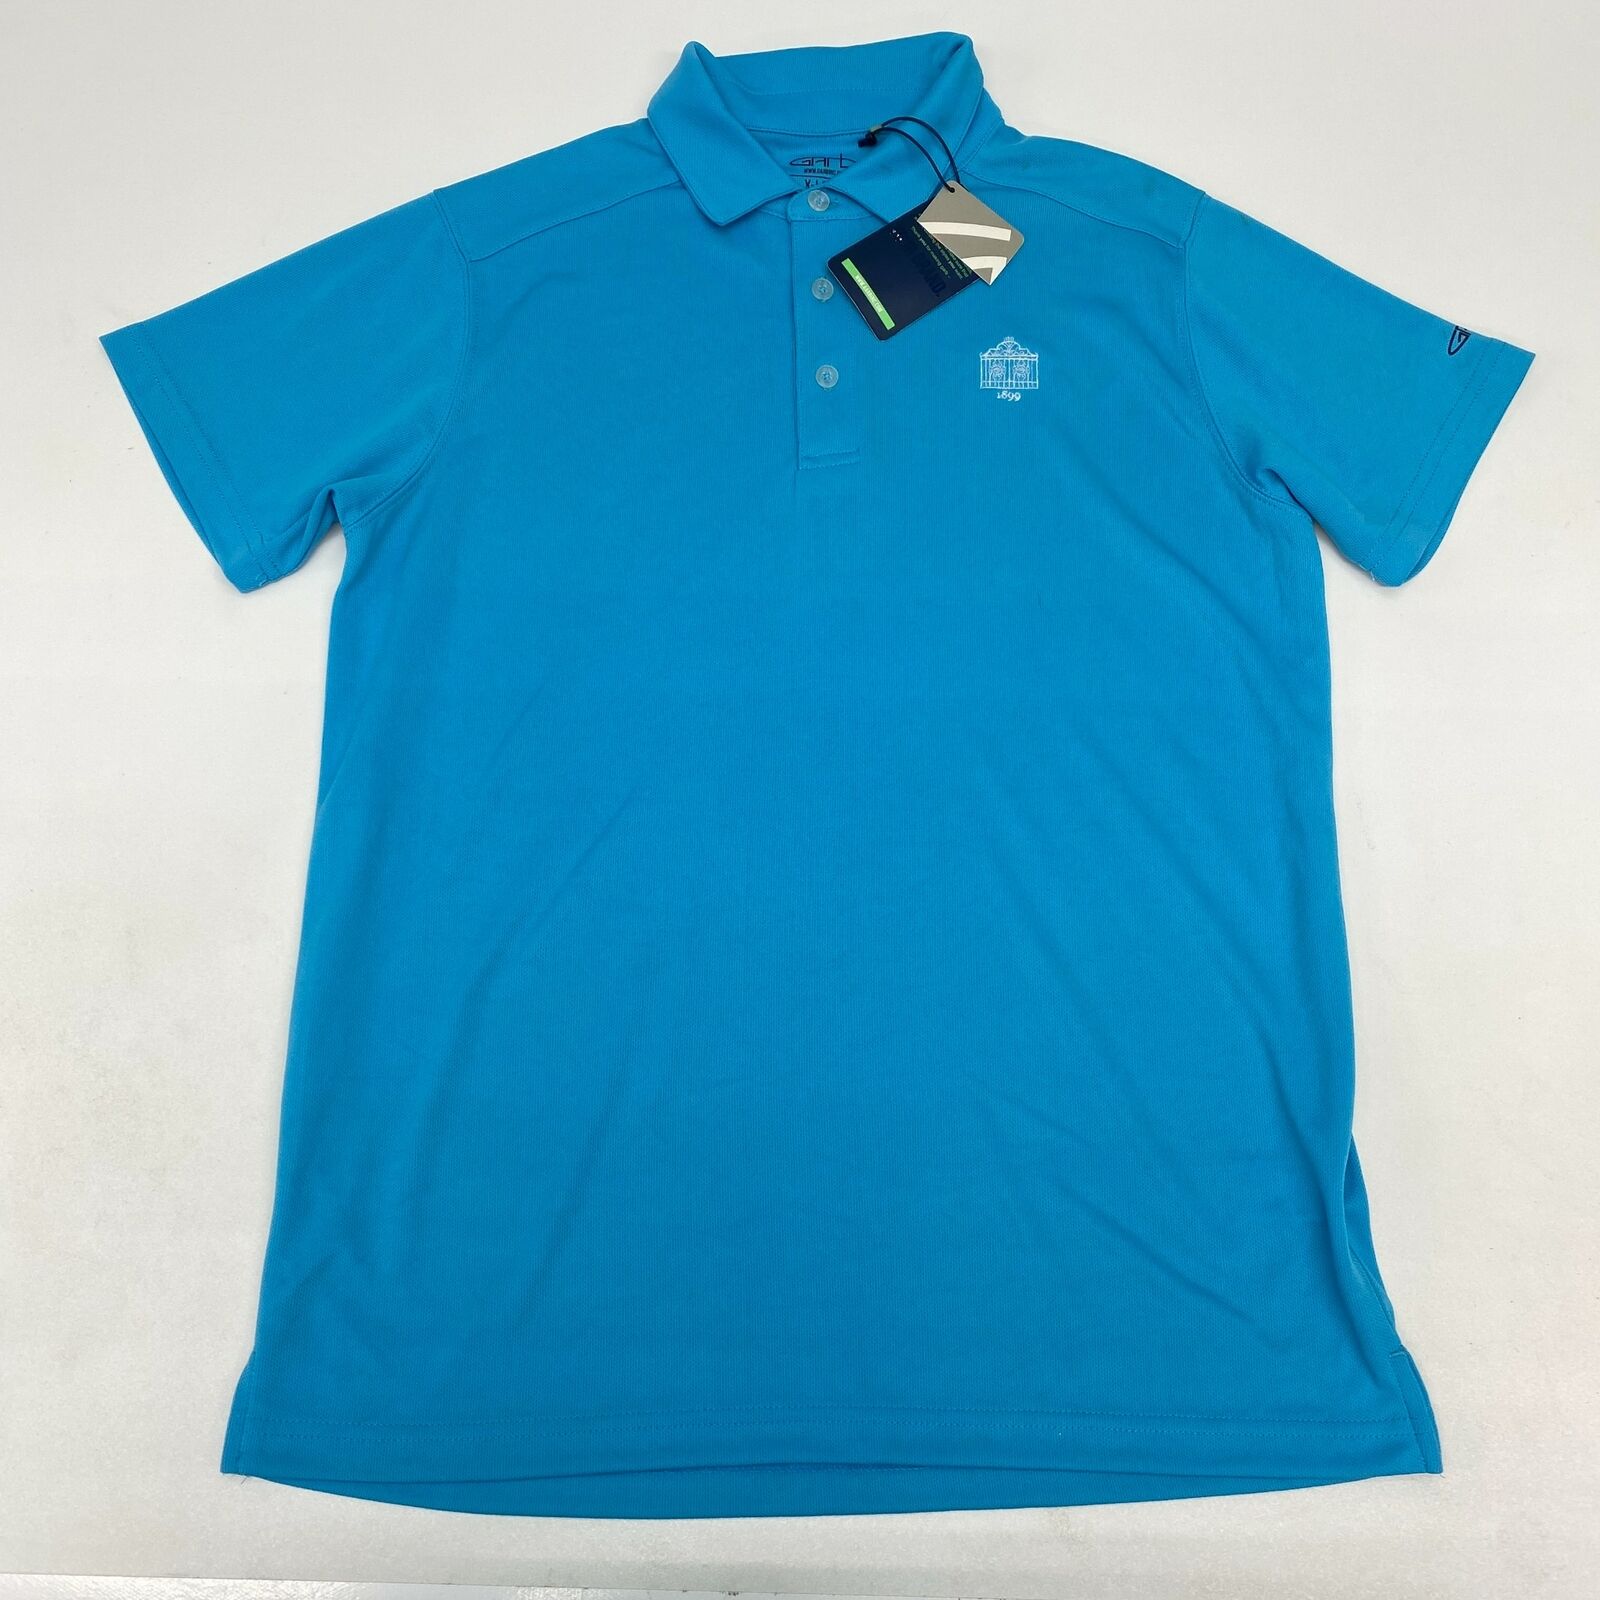 Nwt Garb Golf Polo Shirt Youth Boys Xl 11-12 Short Sleeve Blue Regular Fit Poly